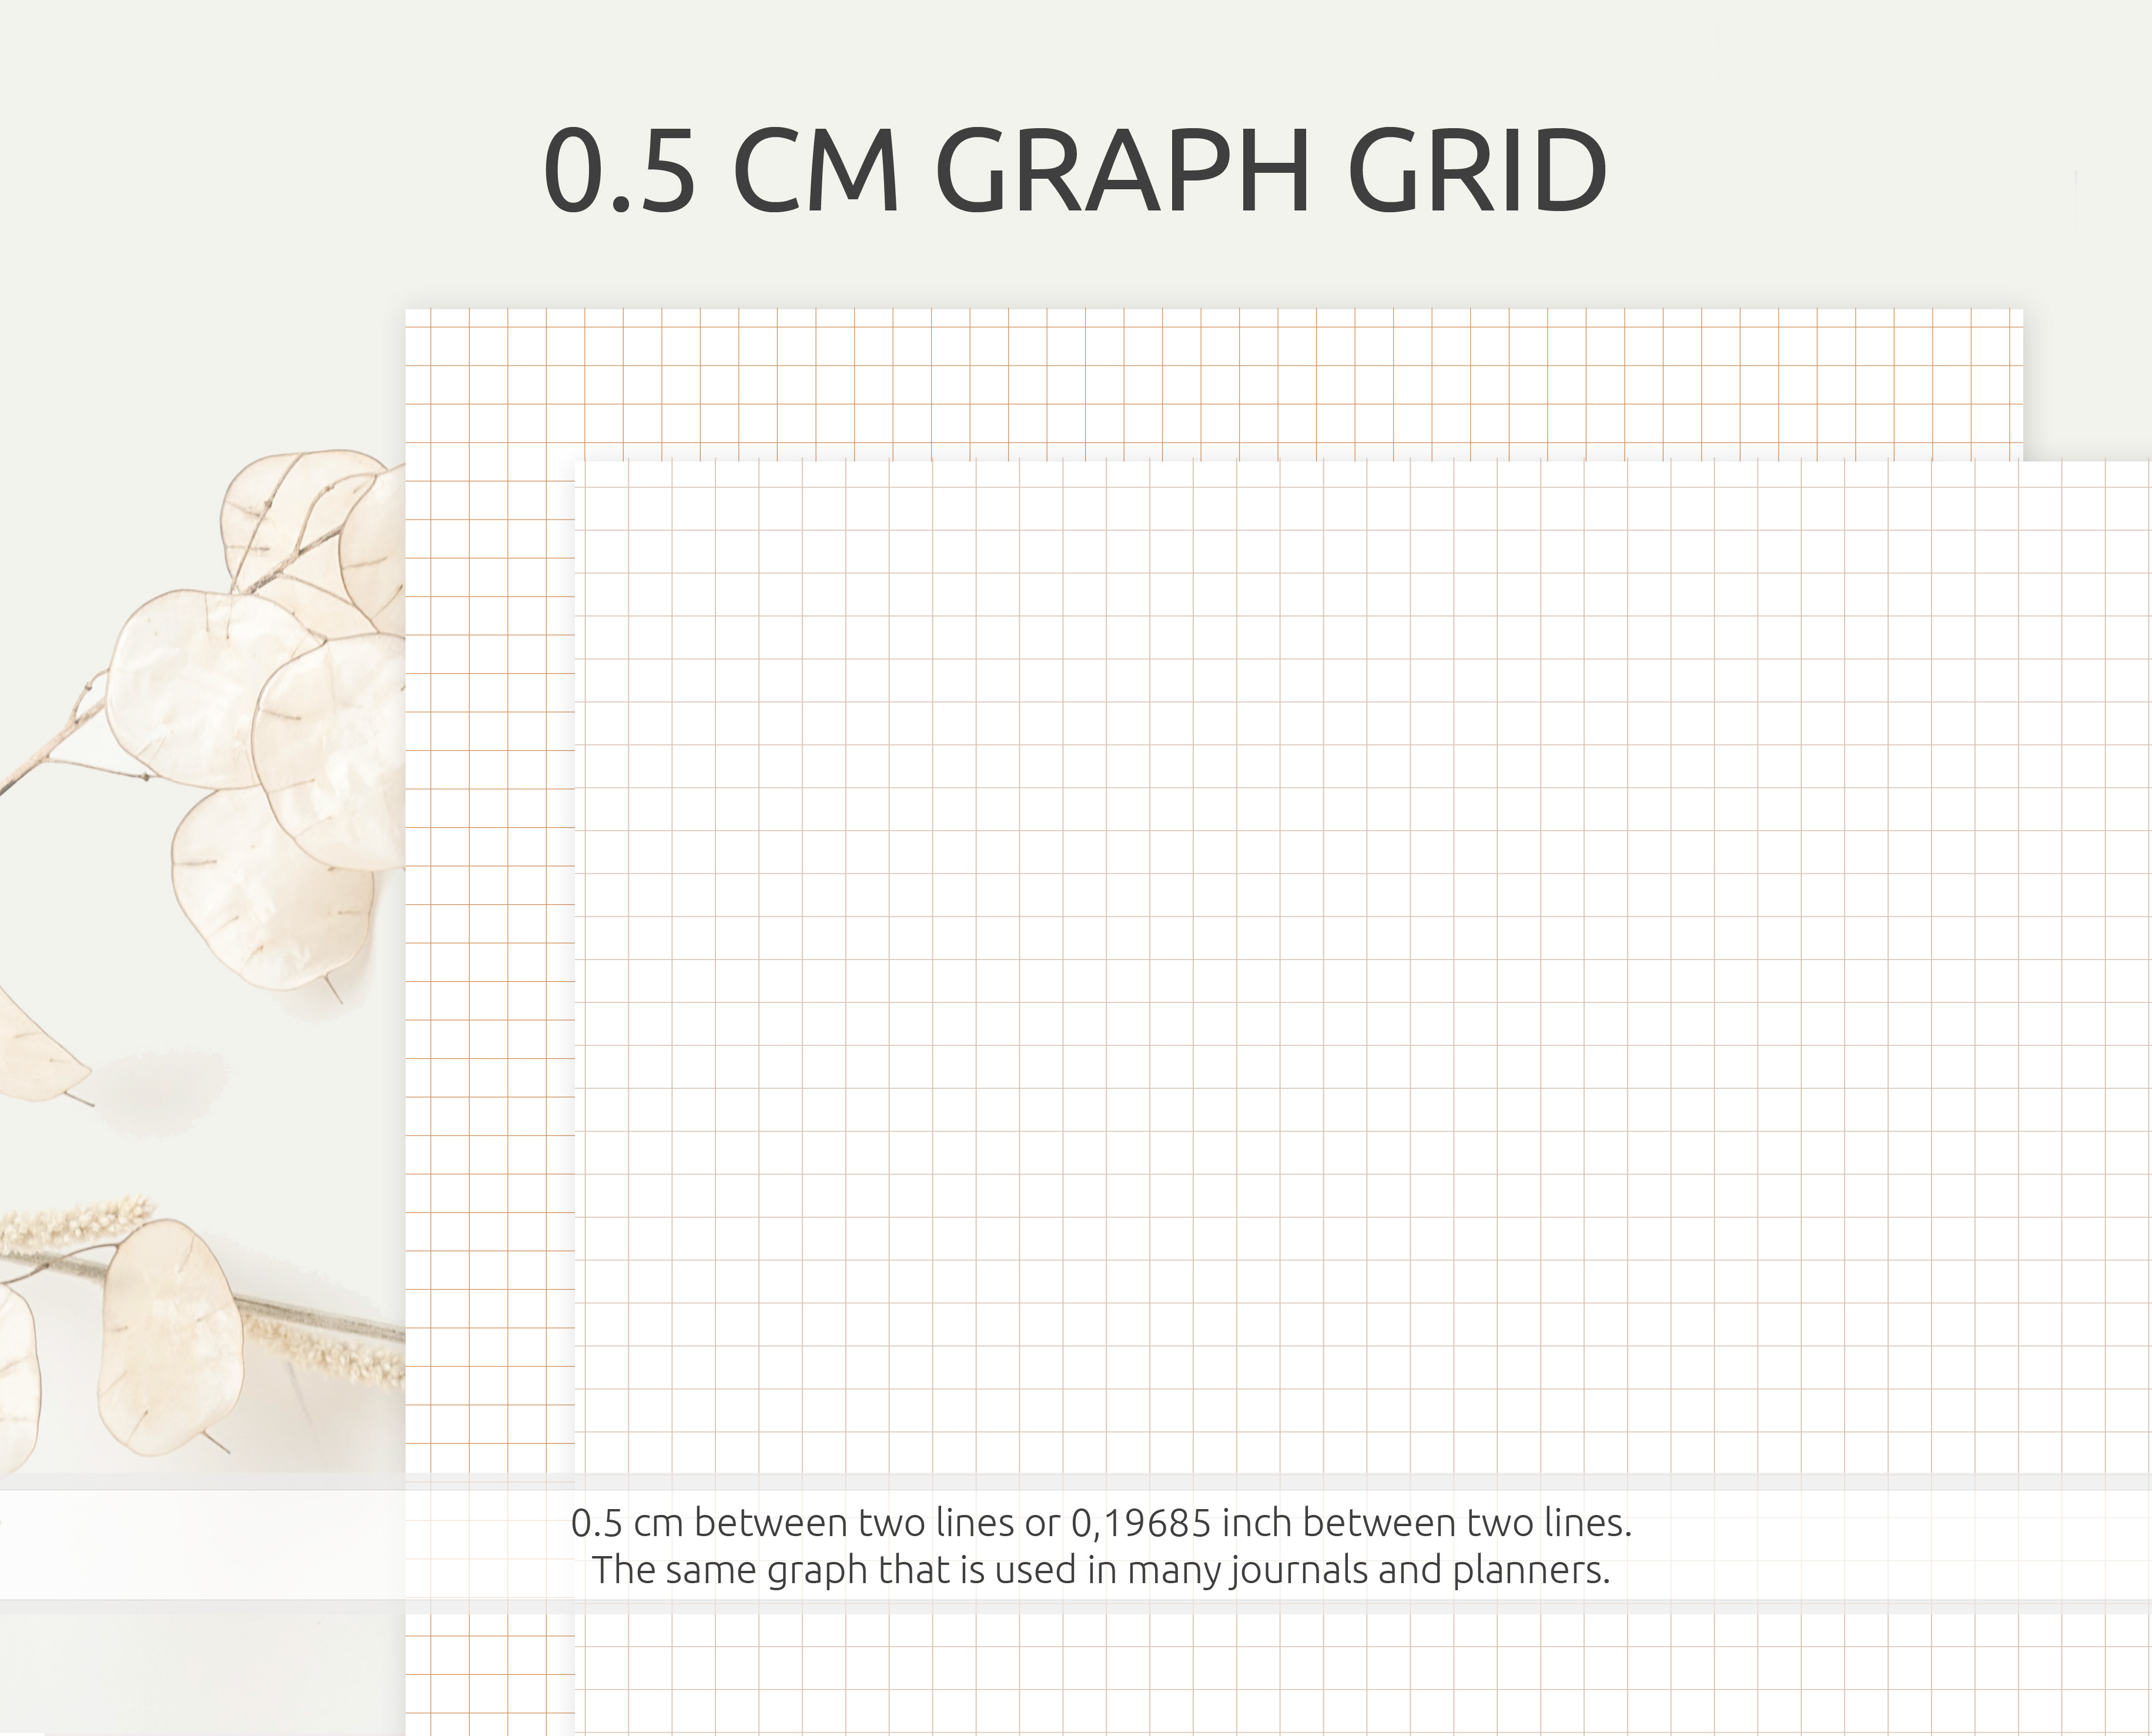 Large grid paper